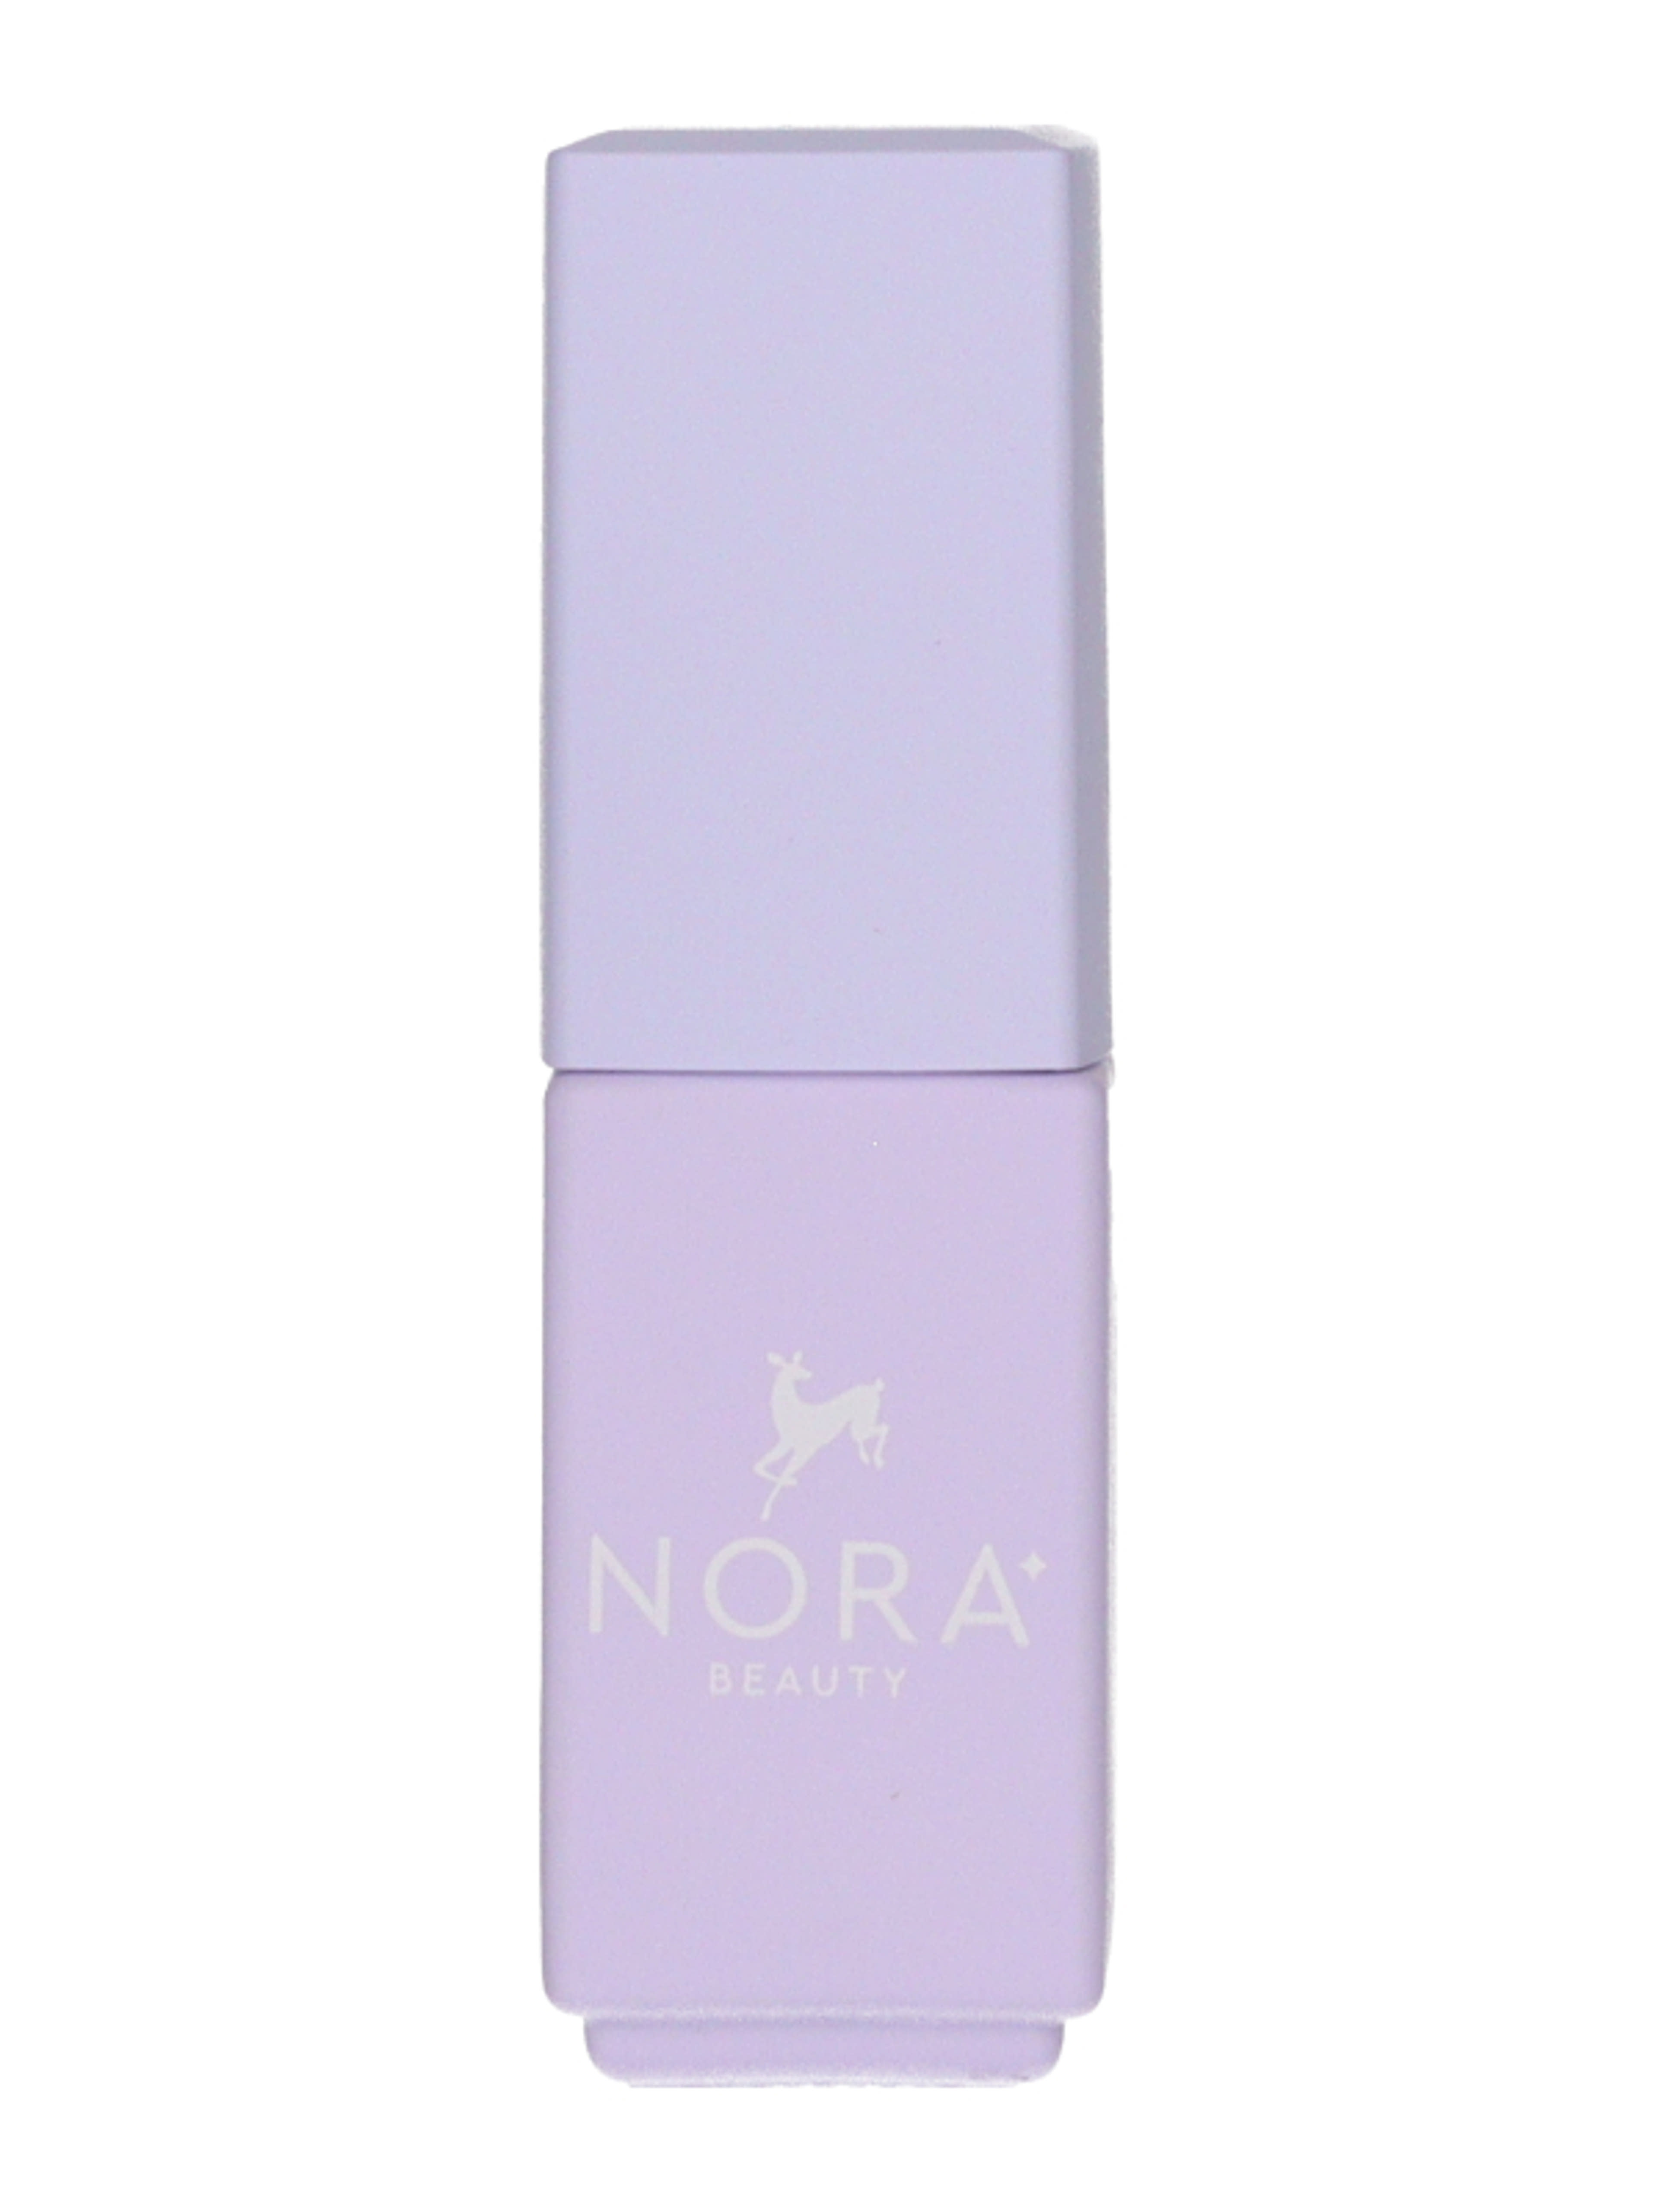 Nora Beauty UV lakkzselé /hd-02 peach perfecti - 1 db-3